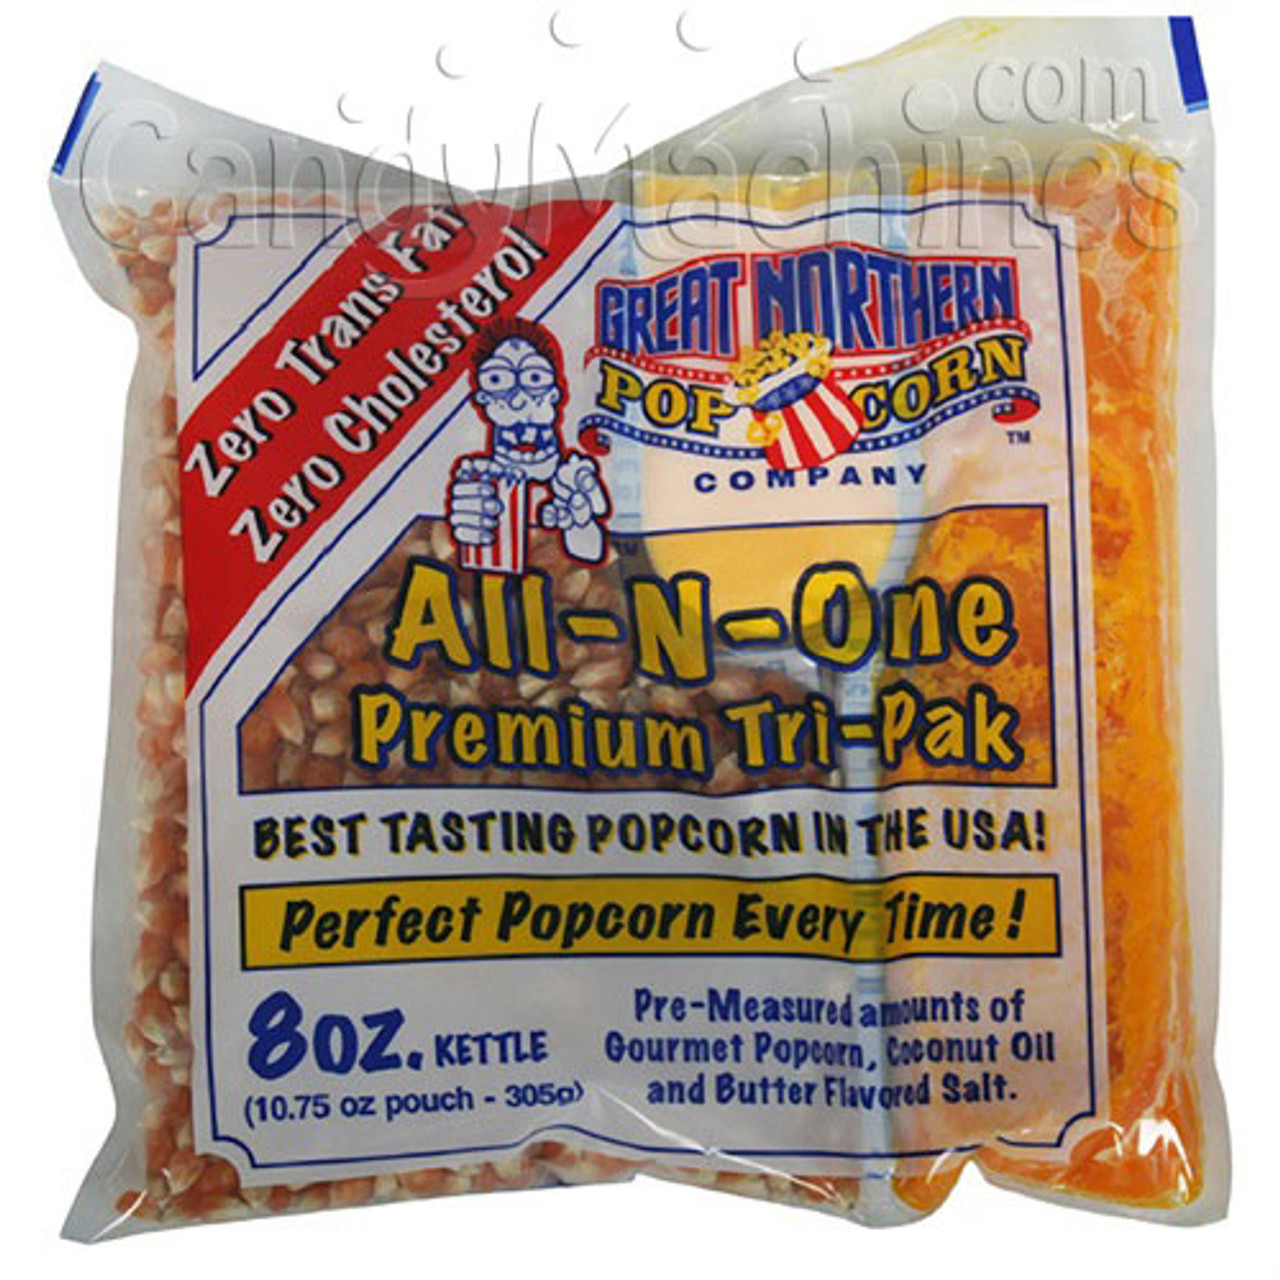 All N One Great Northern Popcorn 8oz  26568.1607812501 ?c=1